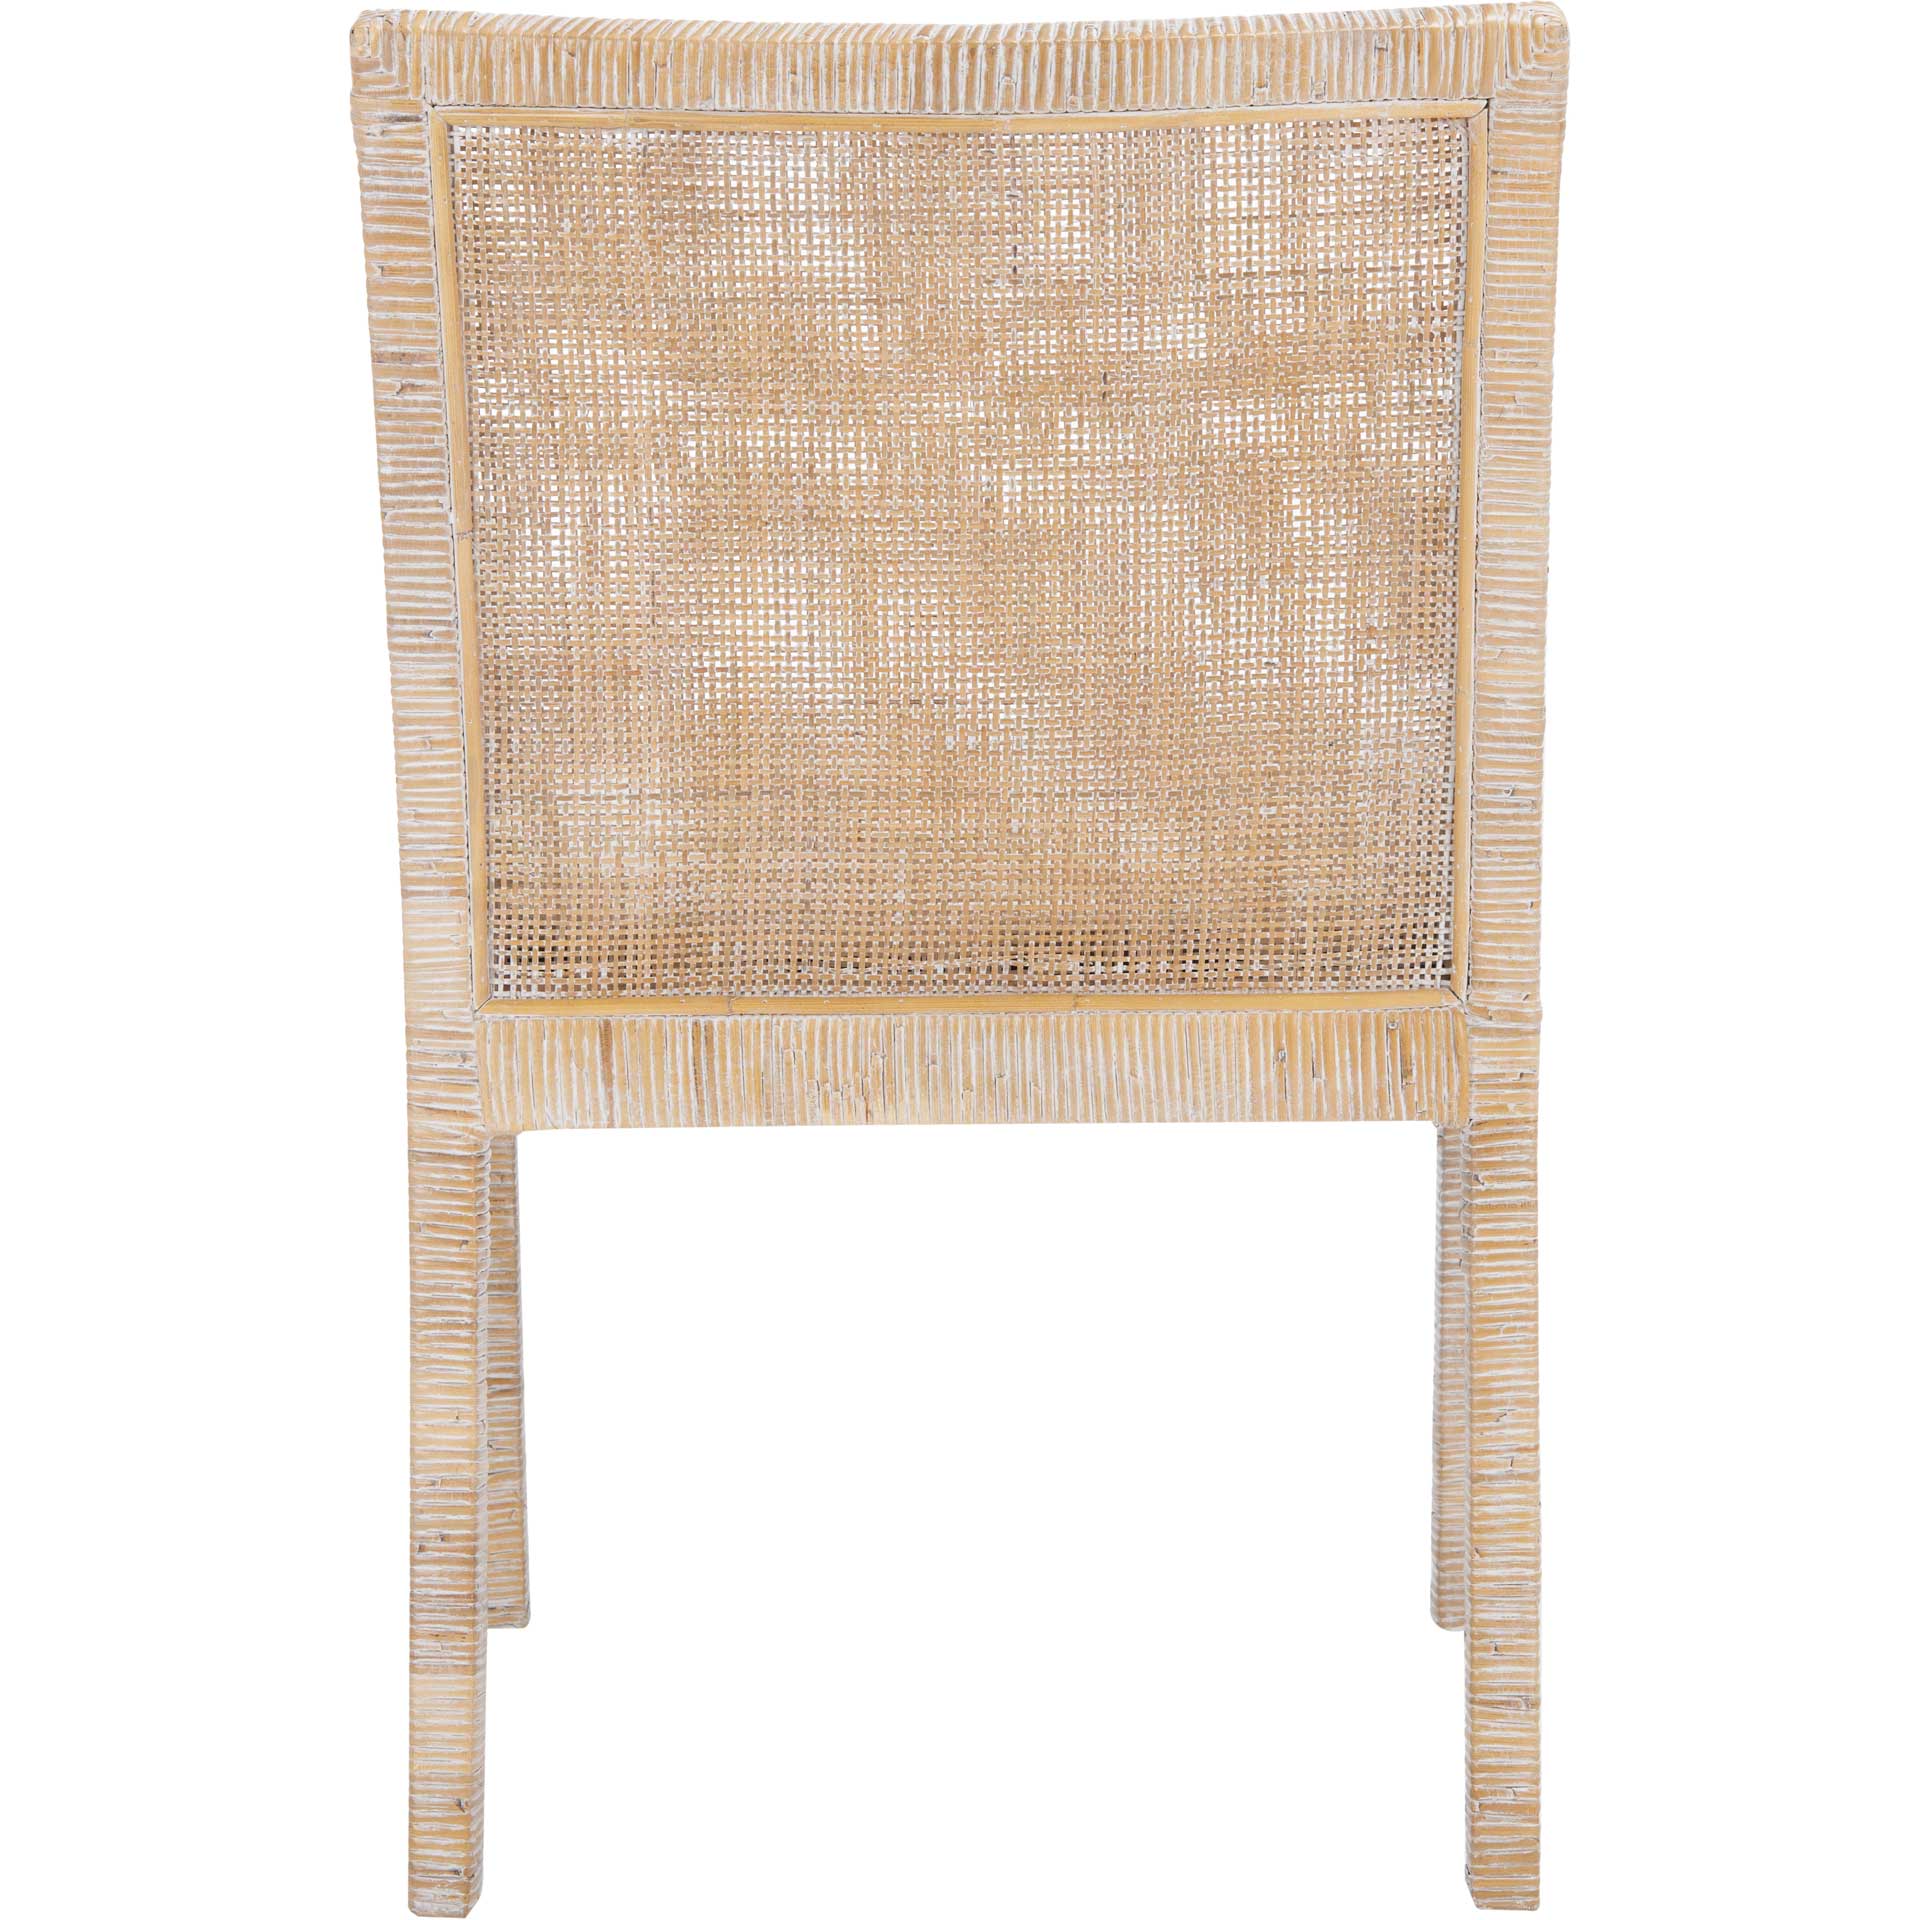 Saffron Accent Chair With Cushion Gray White Wash